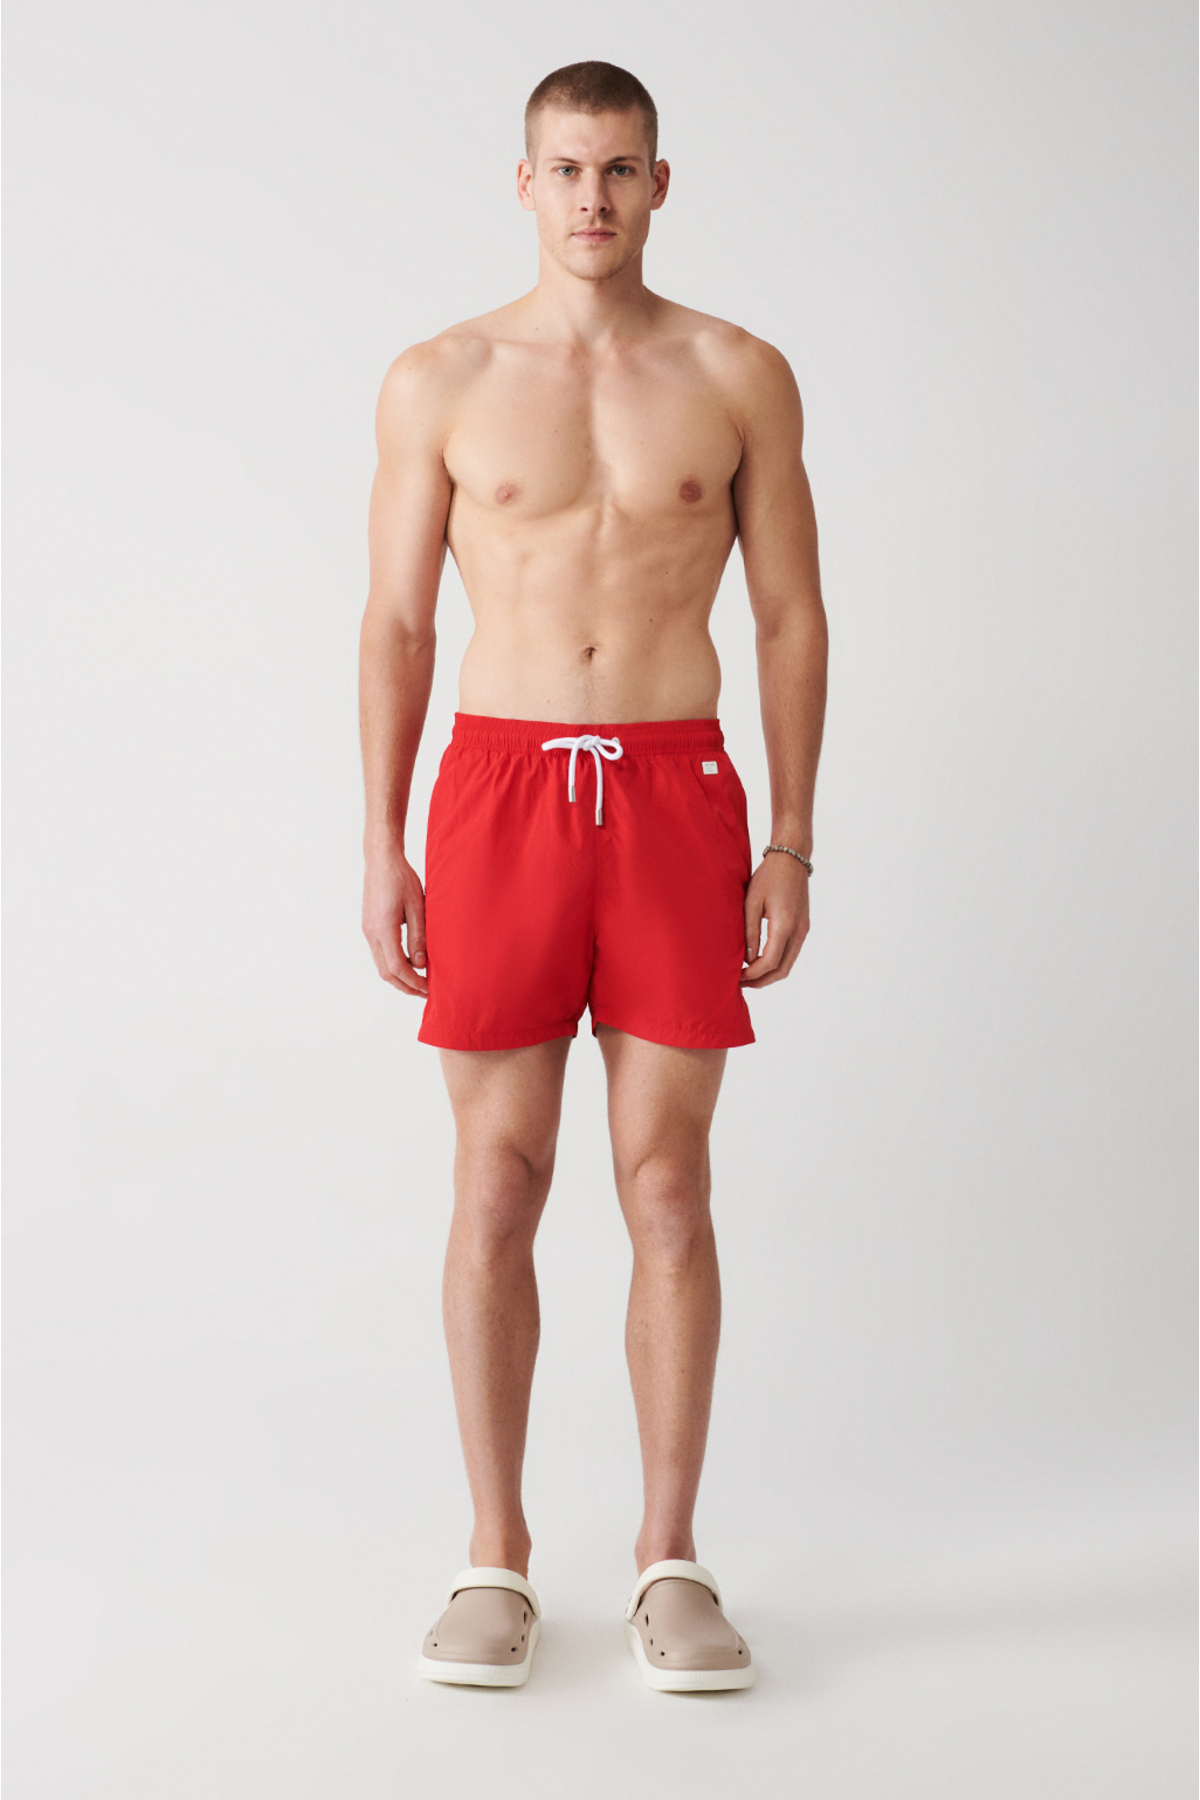 Avva Men's Red Quick Dry Standard Size Plain Special Box Swimsuit Marine Shorts